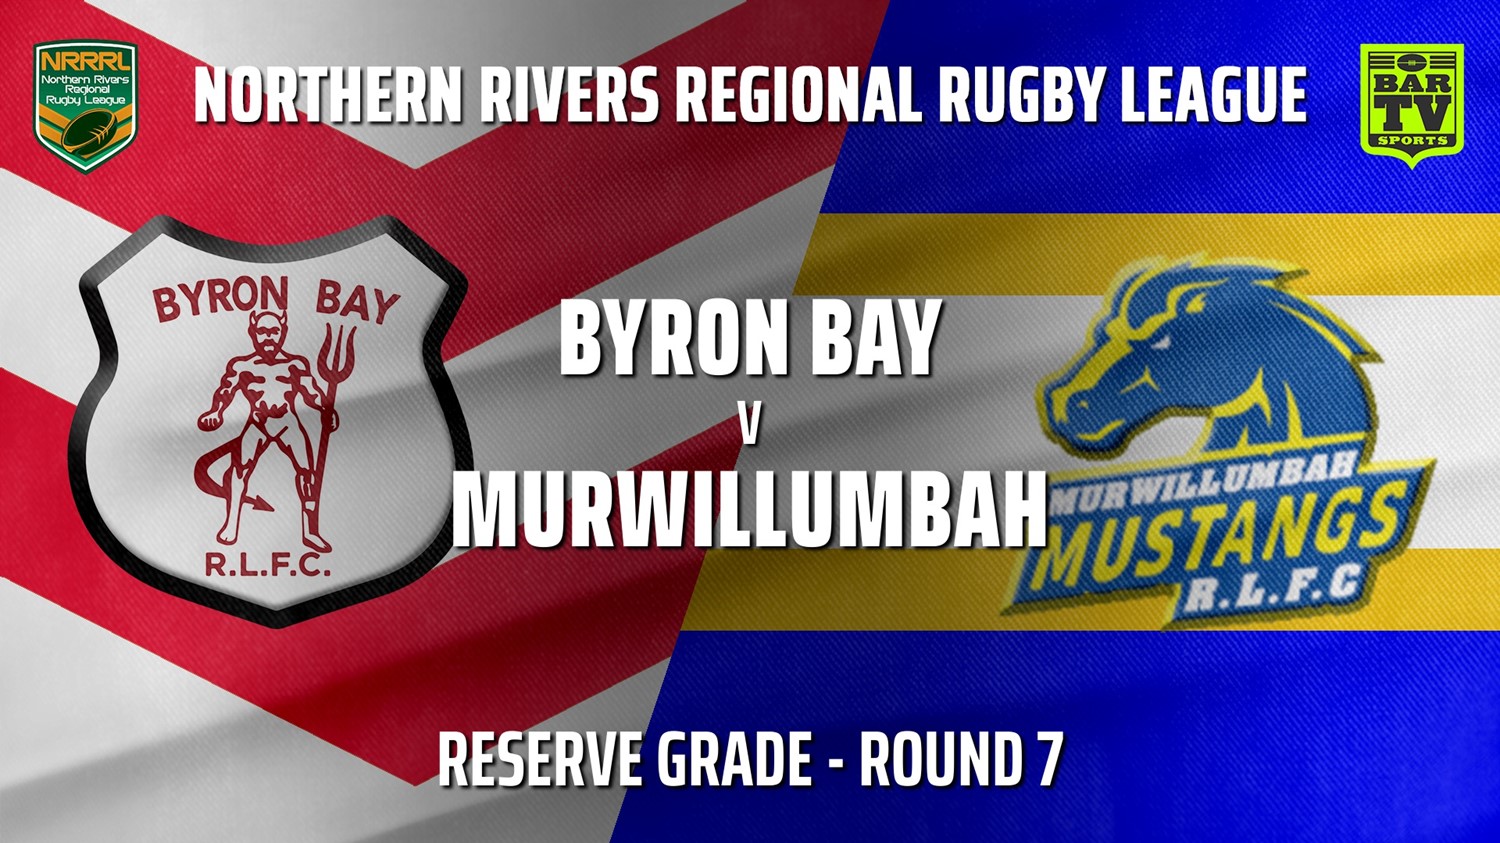 210620-Northern Rivers Round 7 - Reserve Grade - Byron Bay Red Devils v Murwillumbah Mustangs Slate Image